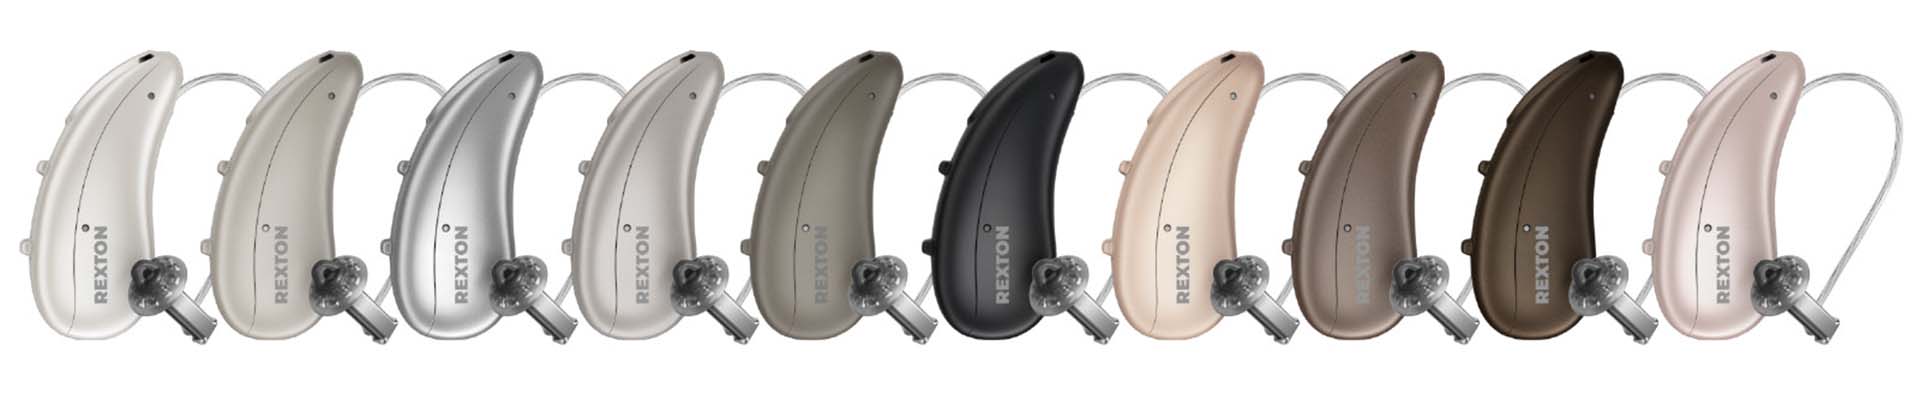 Rexton Reach R-Li rechargeable RIC hearing aids color range